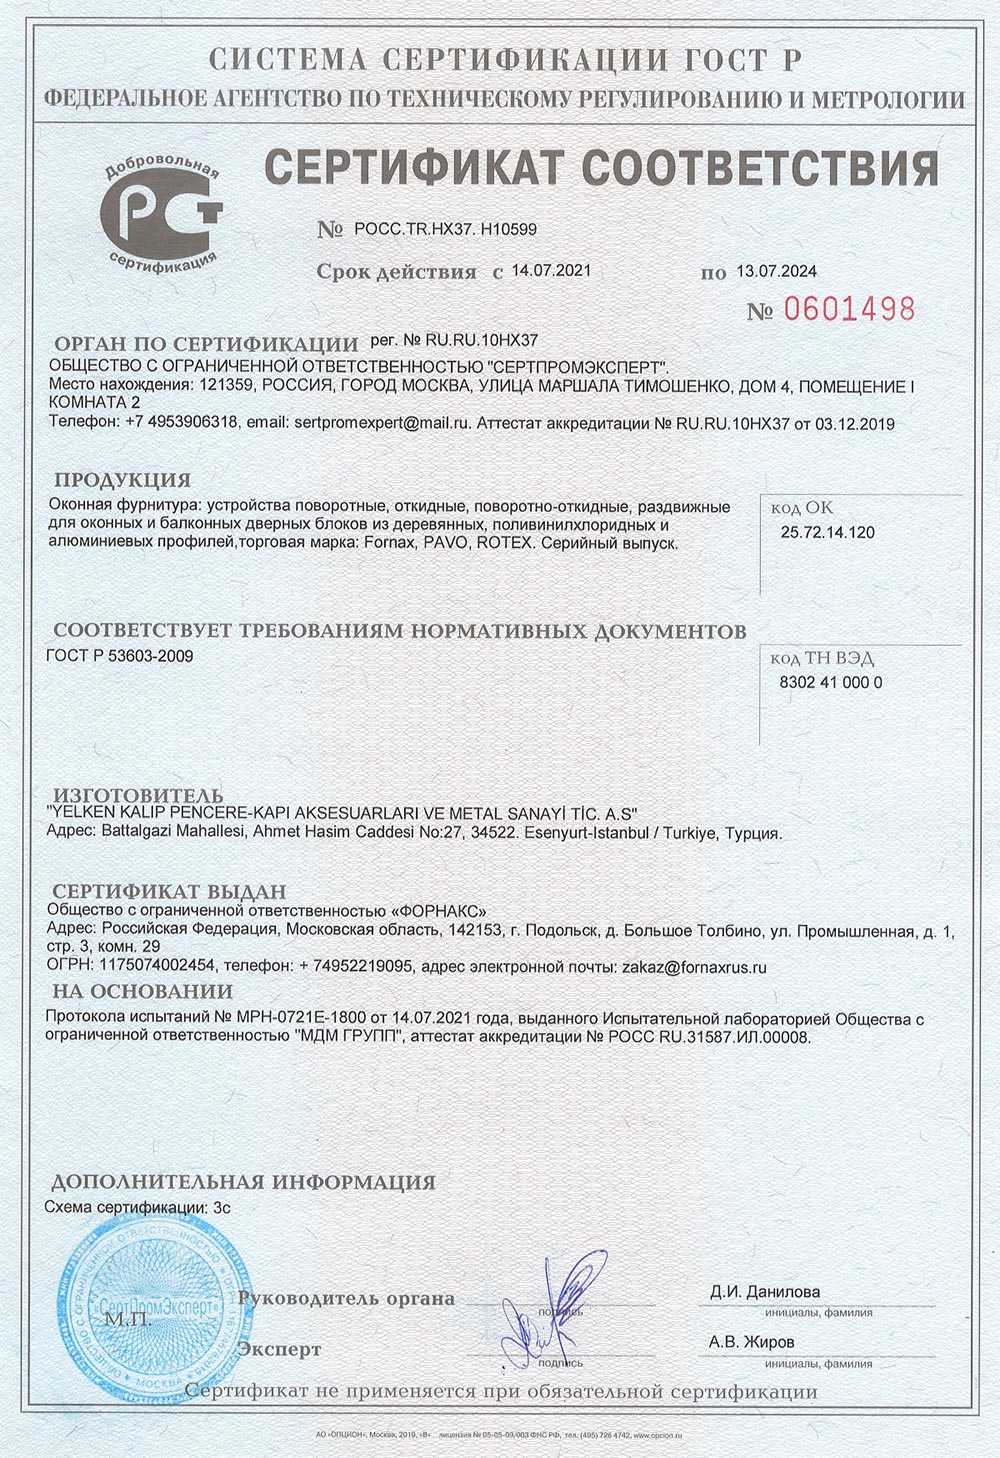 Fornax PAVO ROTEX оконная фурнитура, сертификат соответствия, 13.07.2024